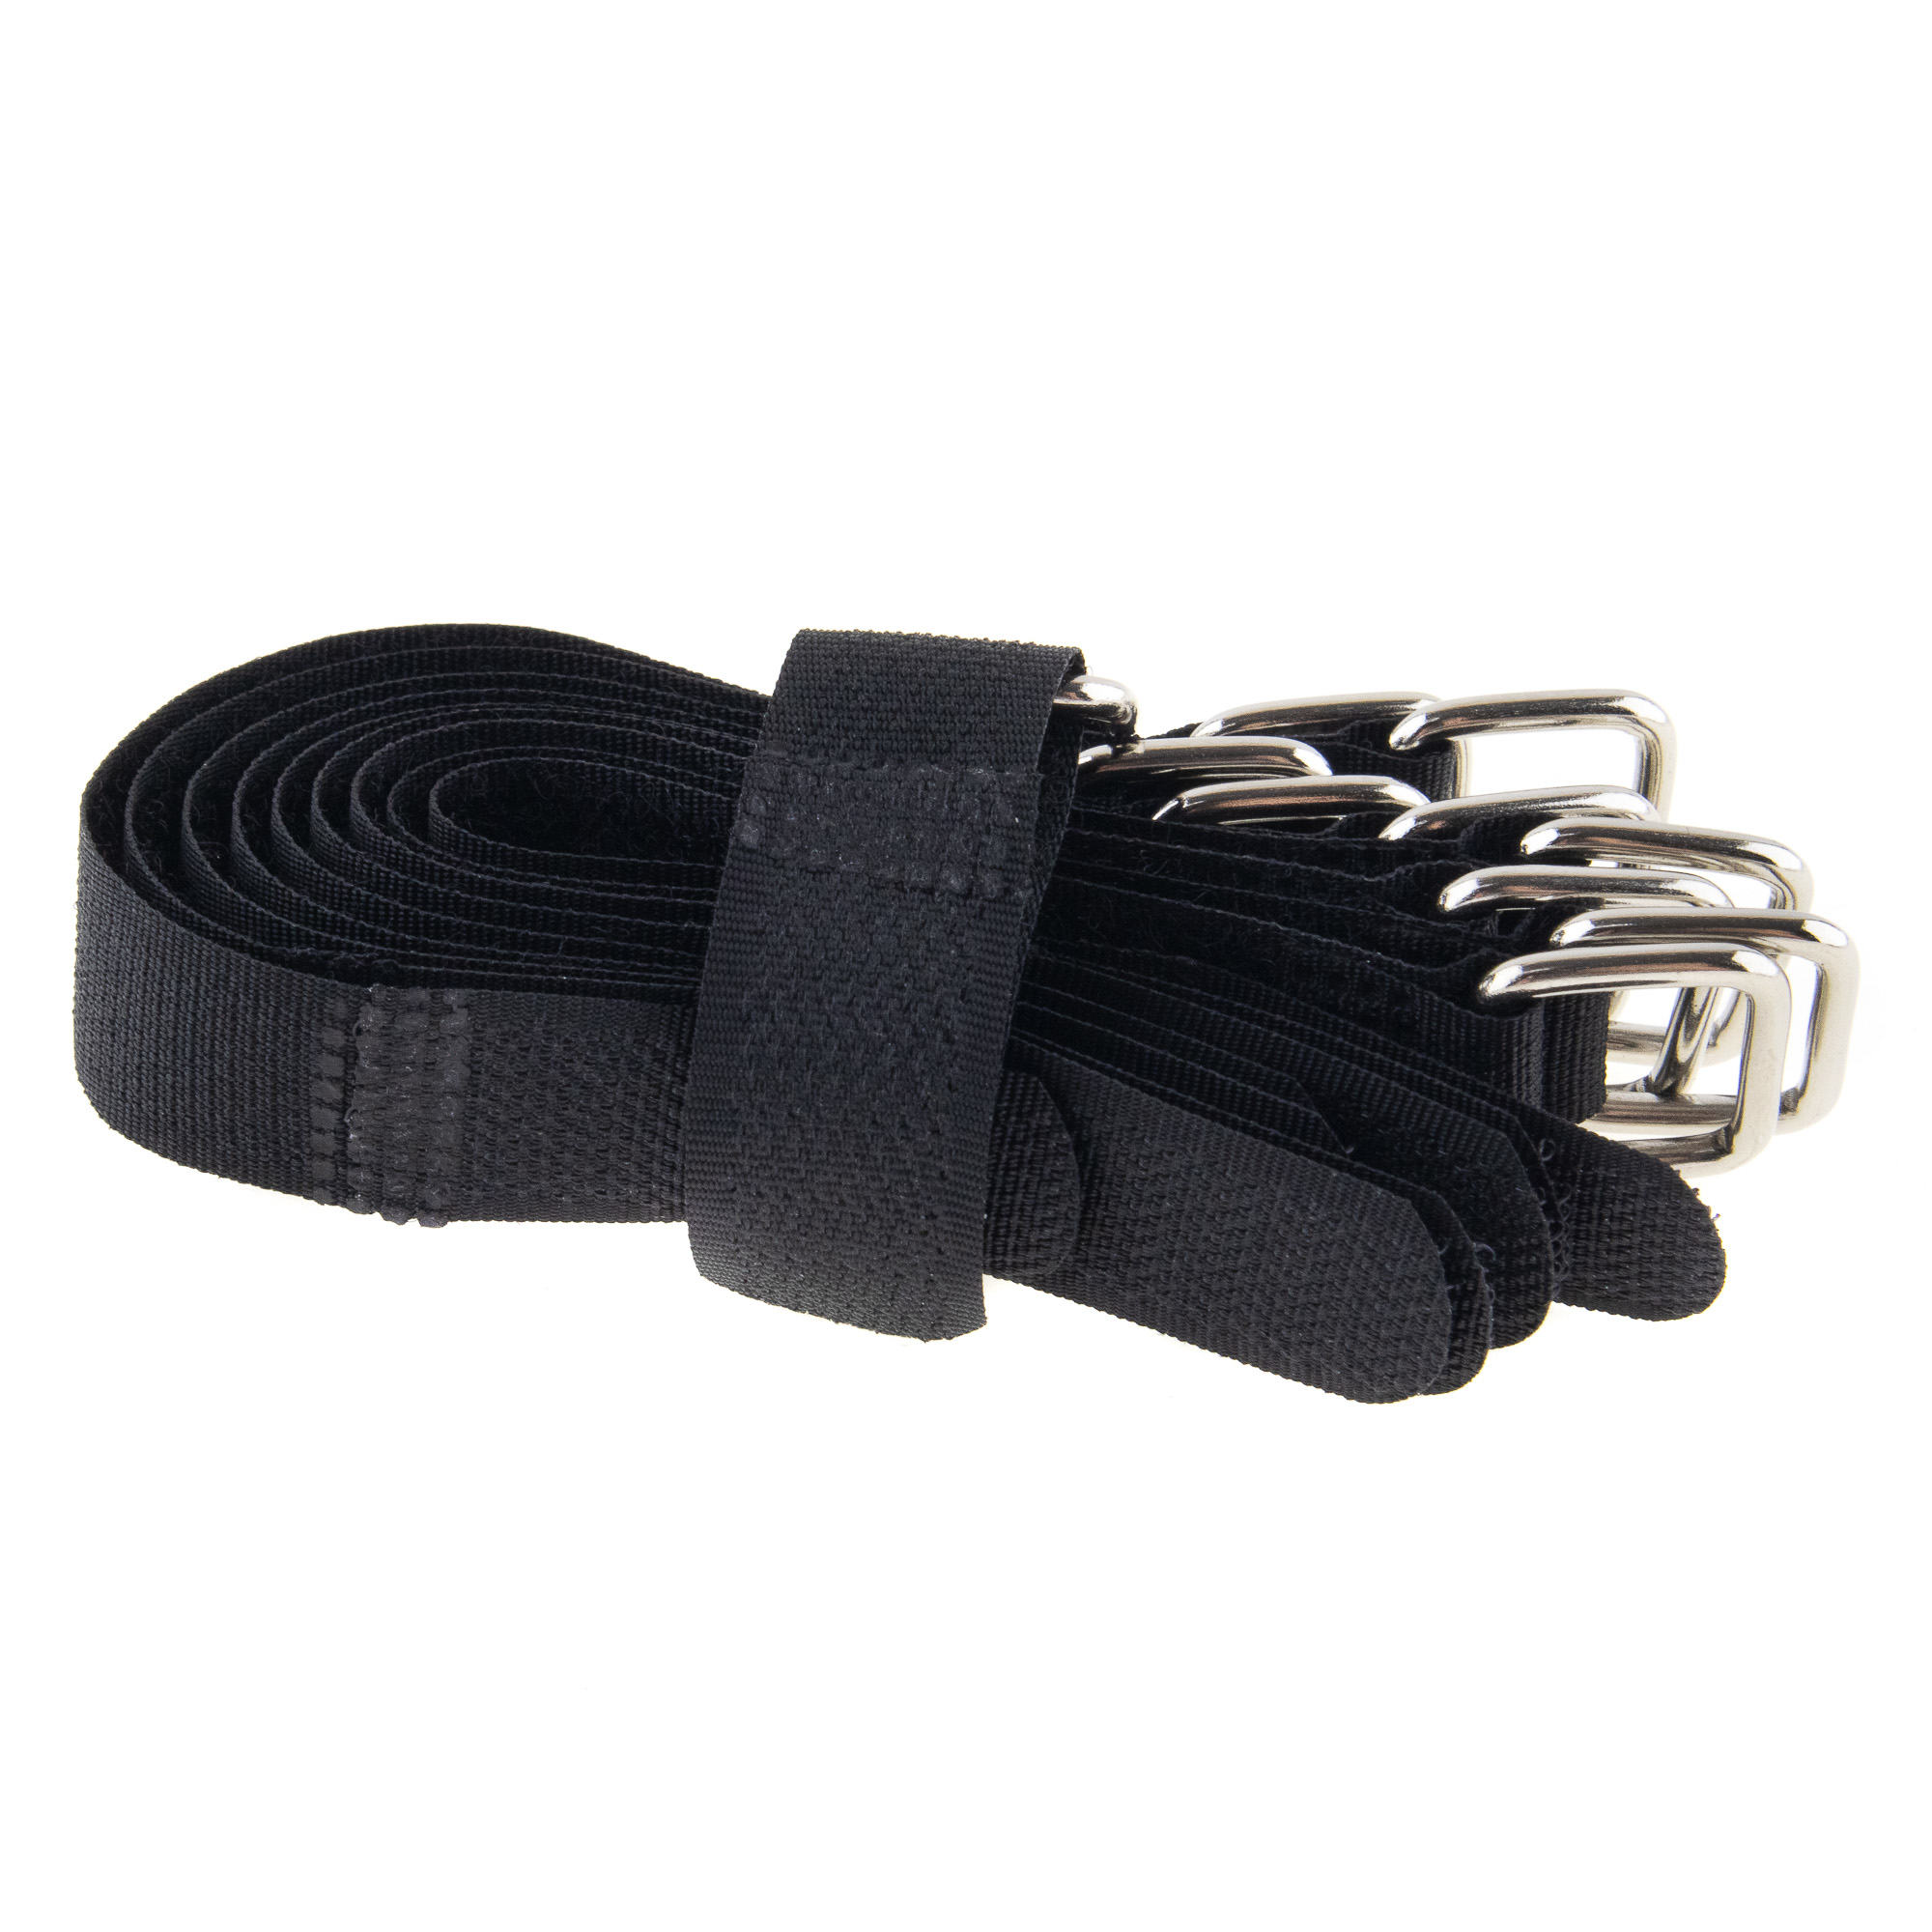 Hook-and-loop strap 150x16